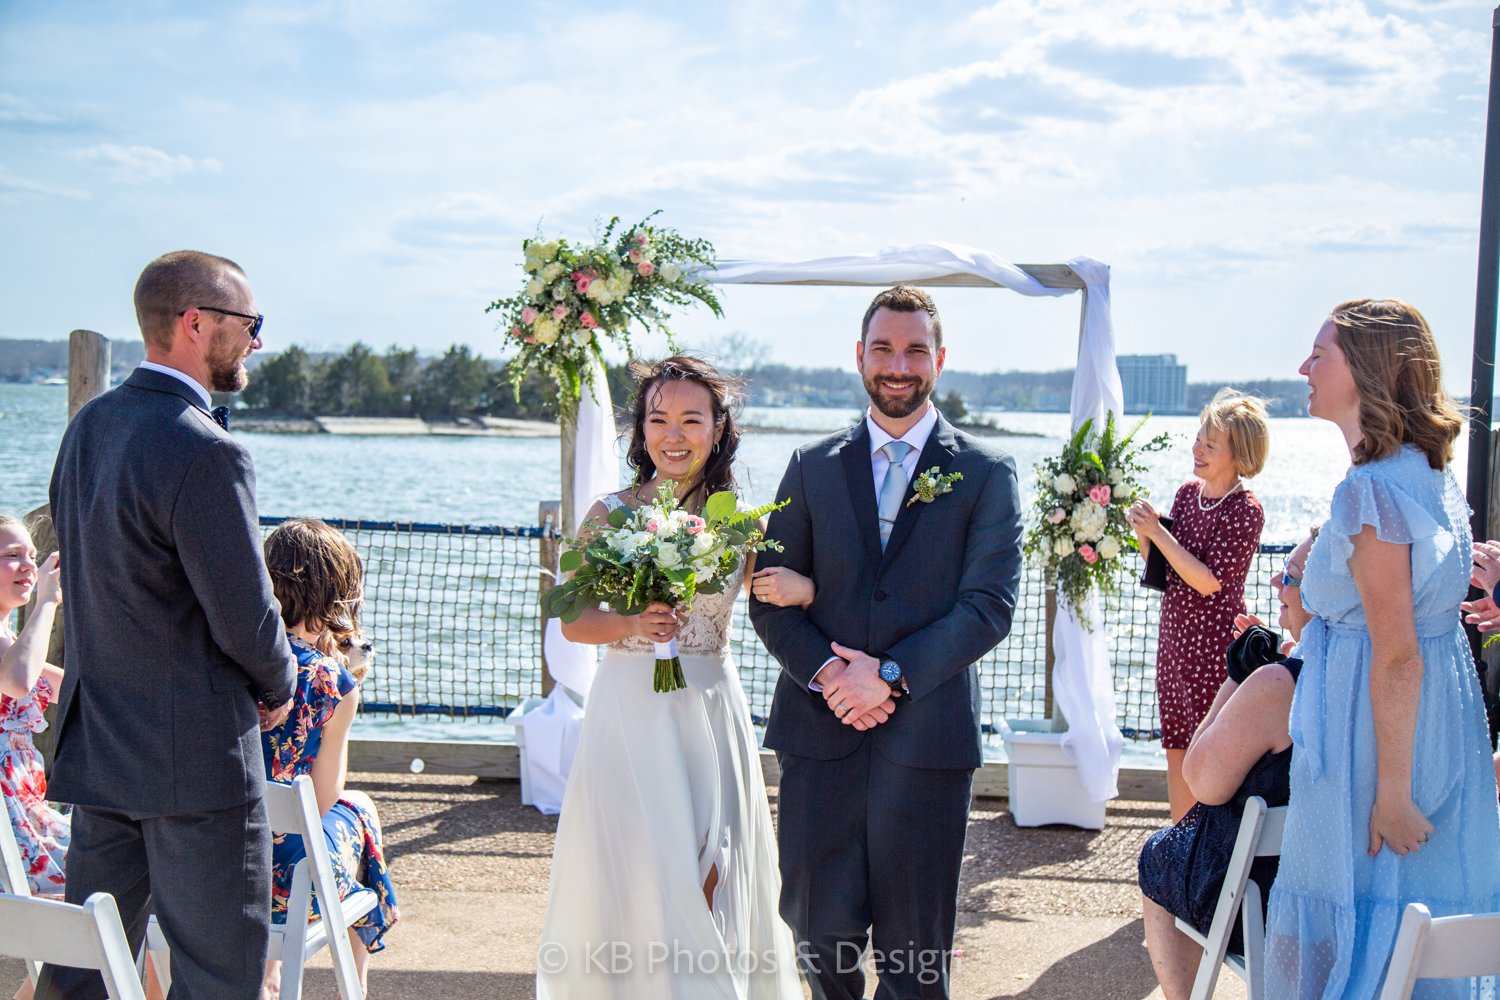 Wedding-Destination-Photography-Lake-of-the-Ozarks-Missouri-Wade-Natsuko-Jefferson-City-bride-groom-Lodge-of-Four-Seasons-wedding-photographer-KB-Photos-and-Design-137.jpg